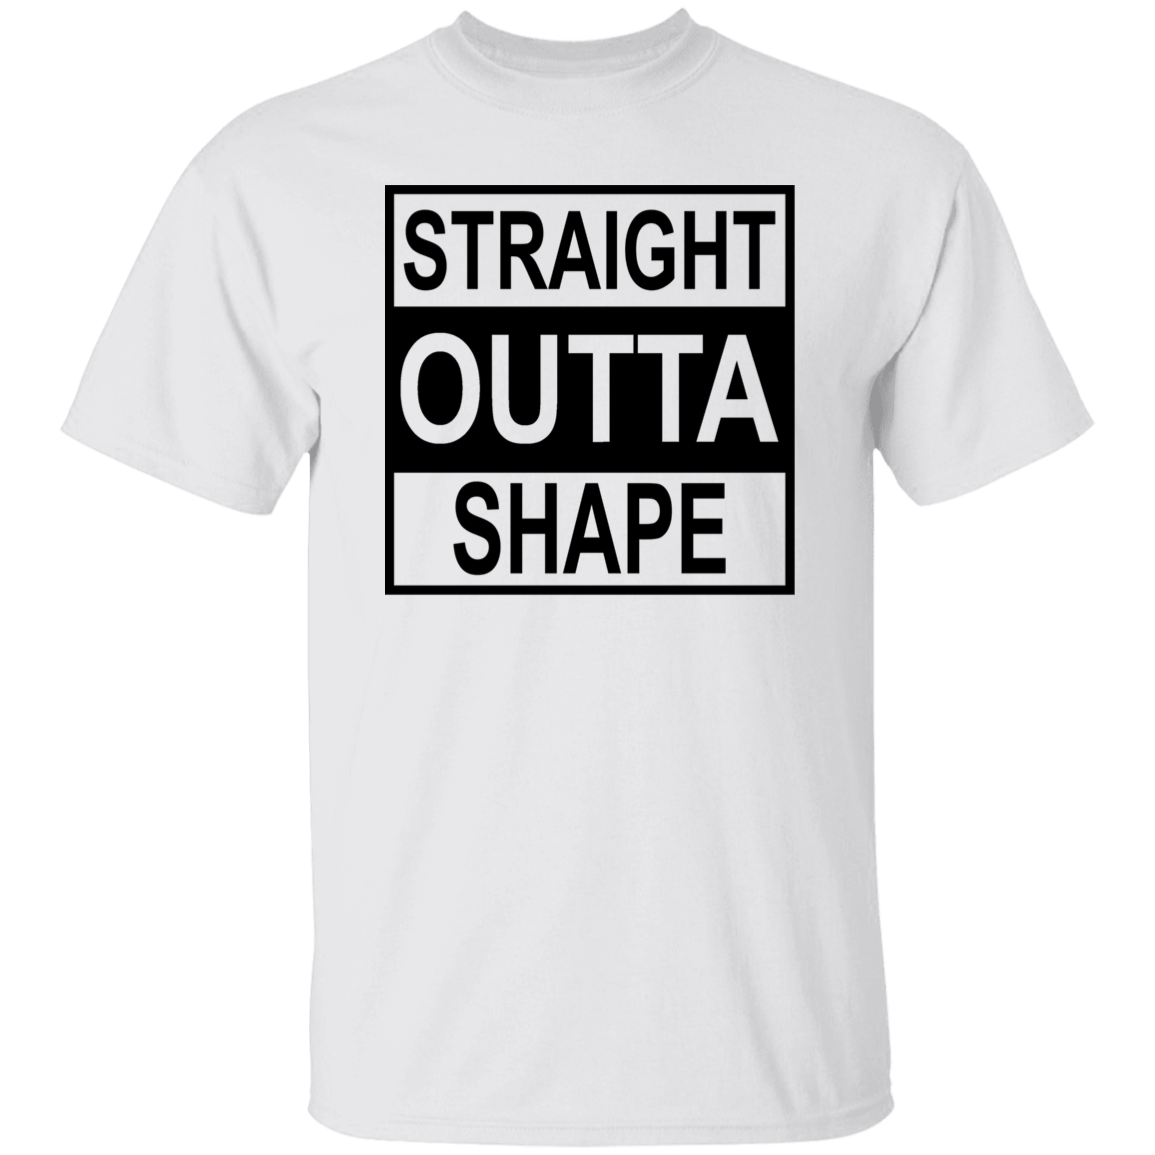 Shape 5.3 oz. T-Shirt